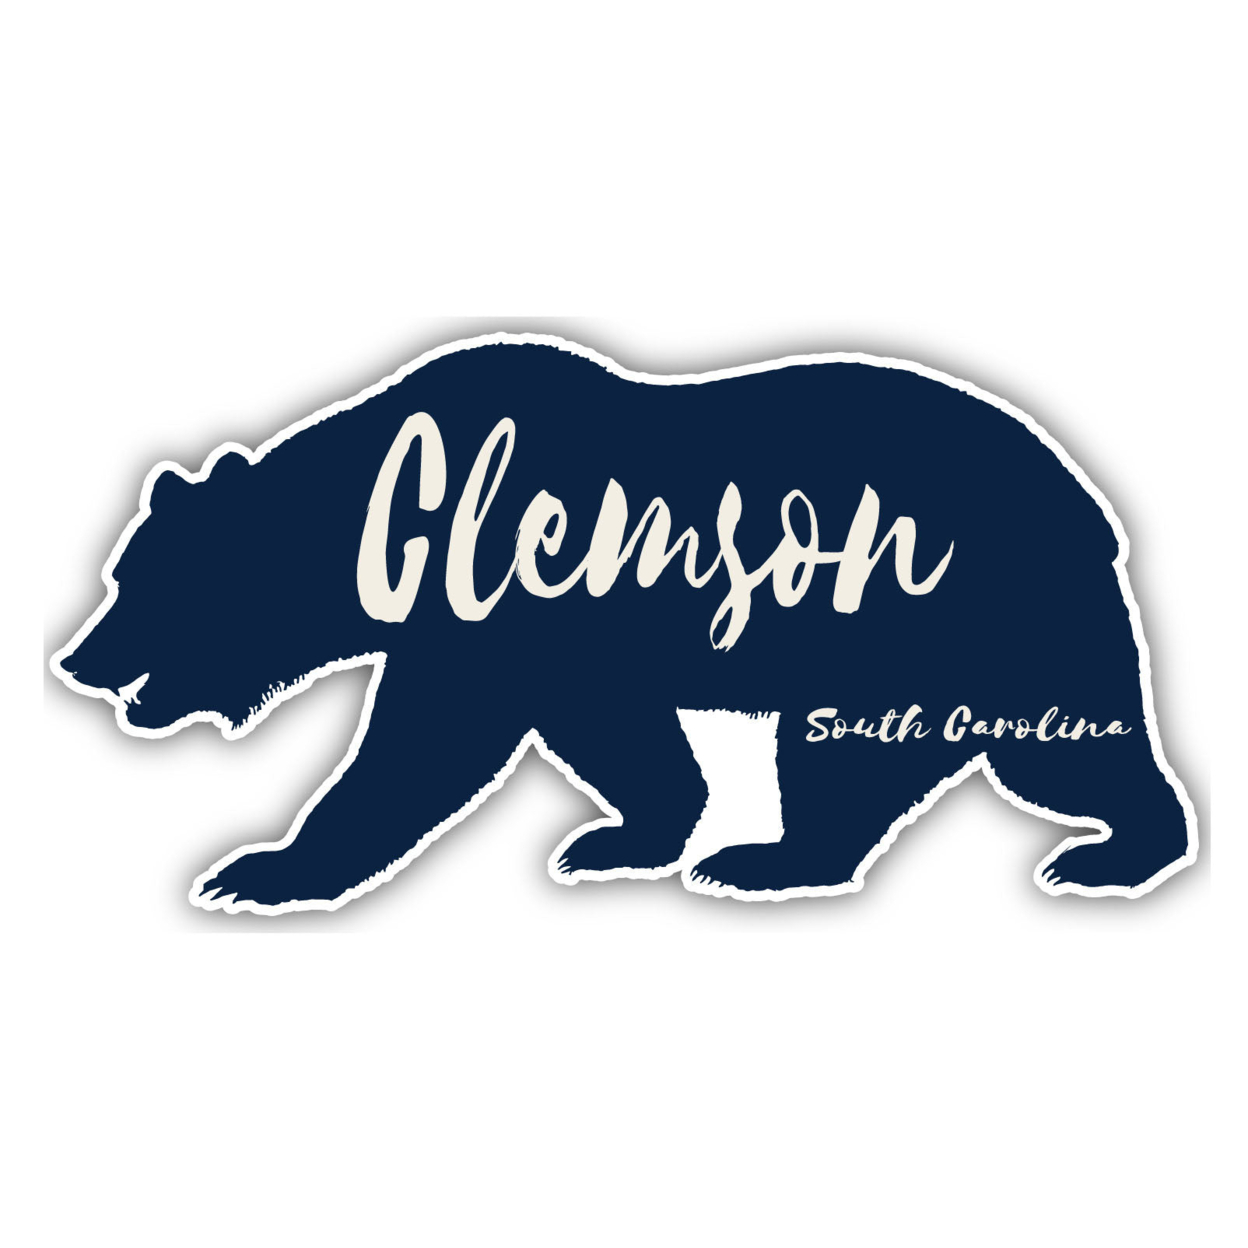 Clemson South Carolina Souvenir Decorative Stickers (Choose Theme And Size) - Single Unit, 2-Inch, Bear